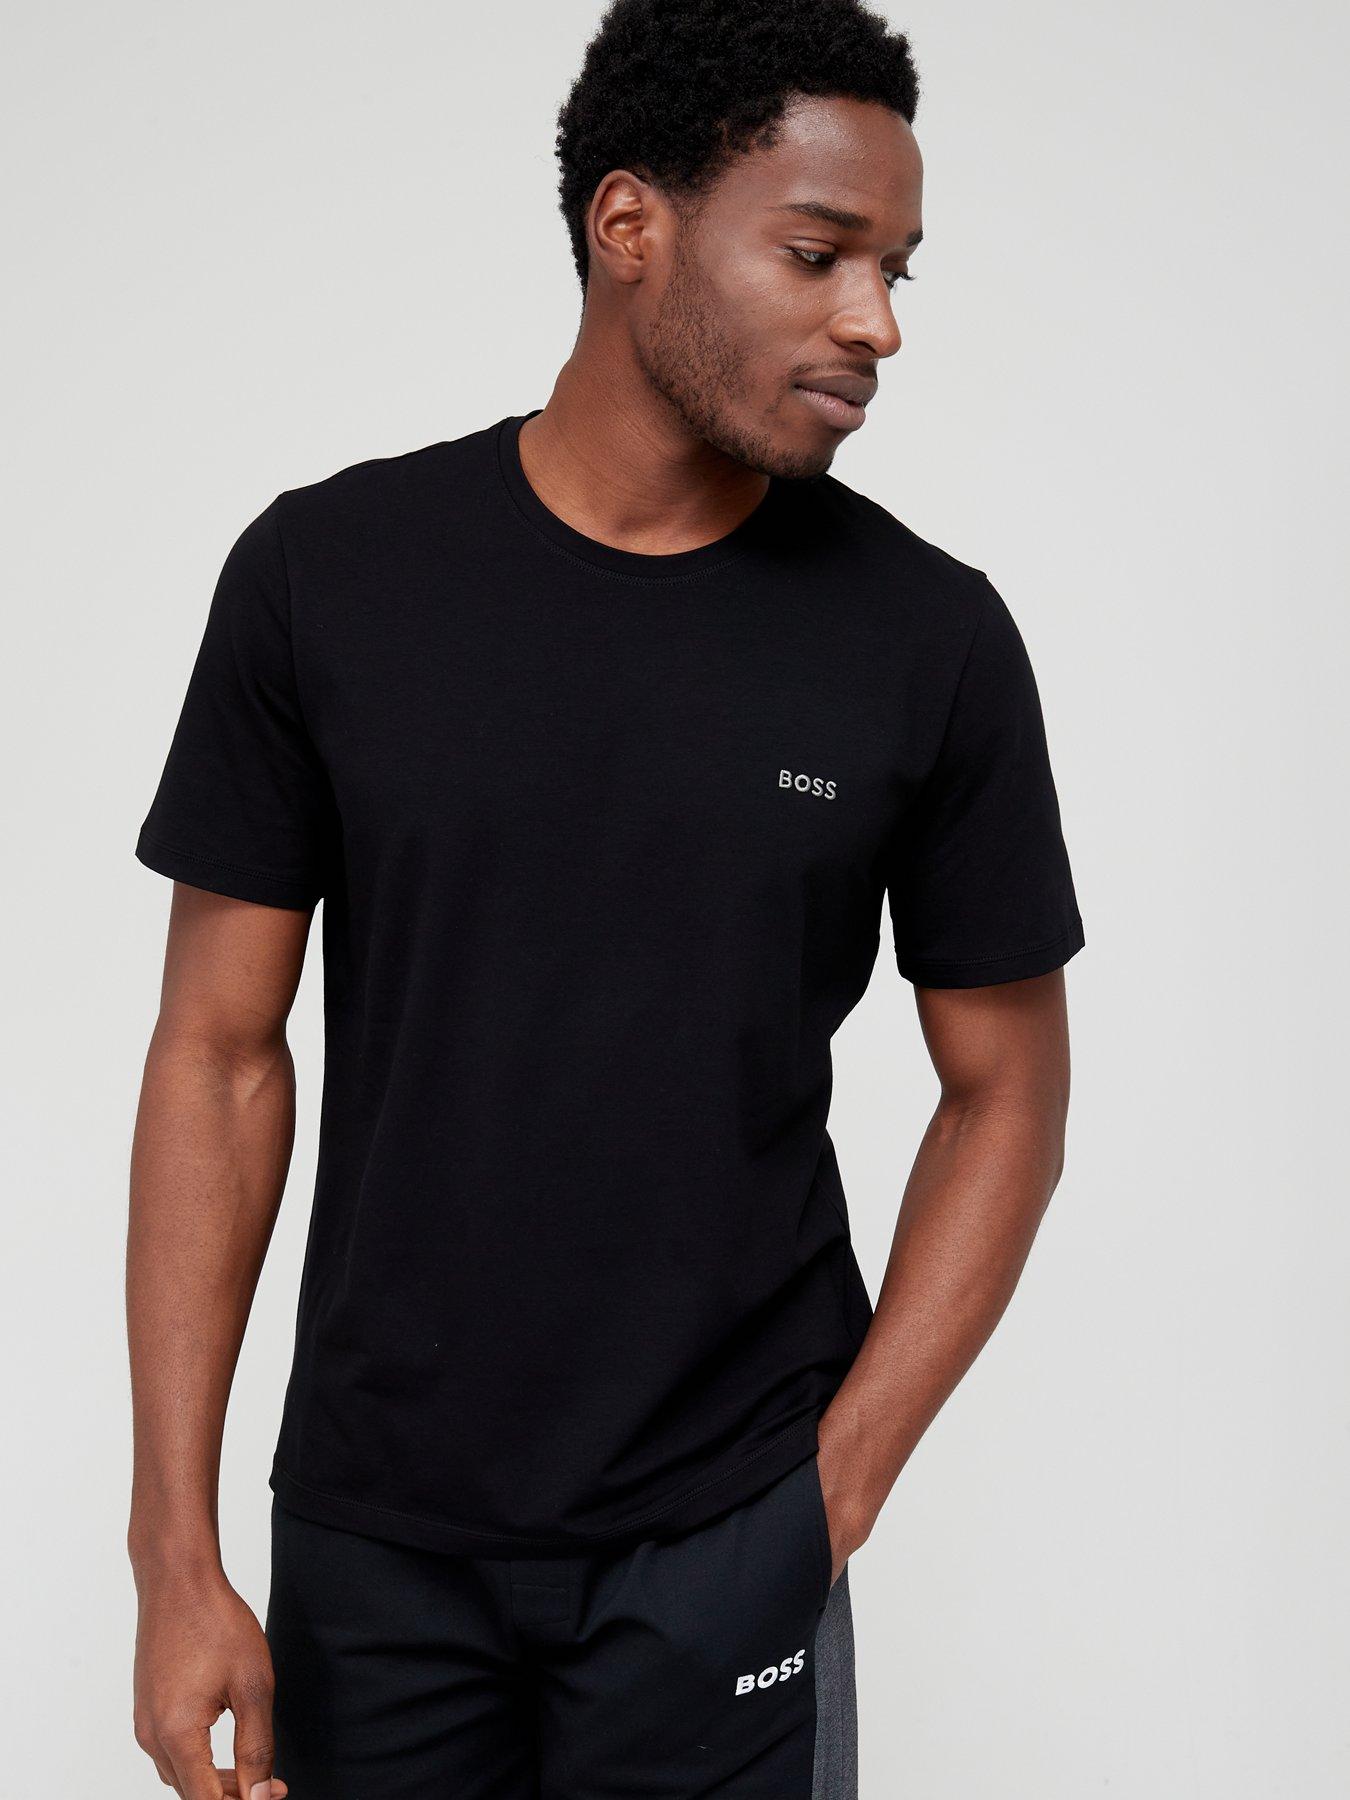 Nightwear & Loungewear Bodywear Mix & Match Lounge T-Shirt - Black